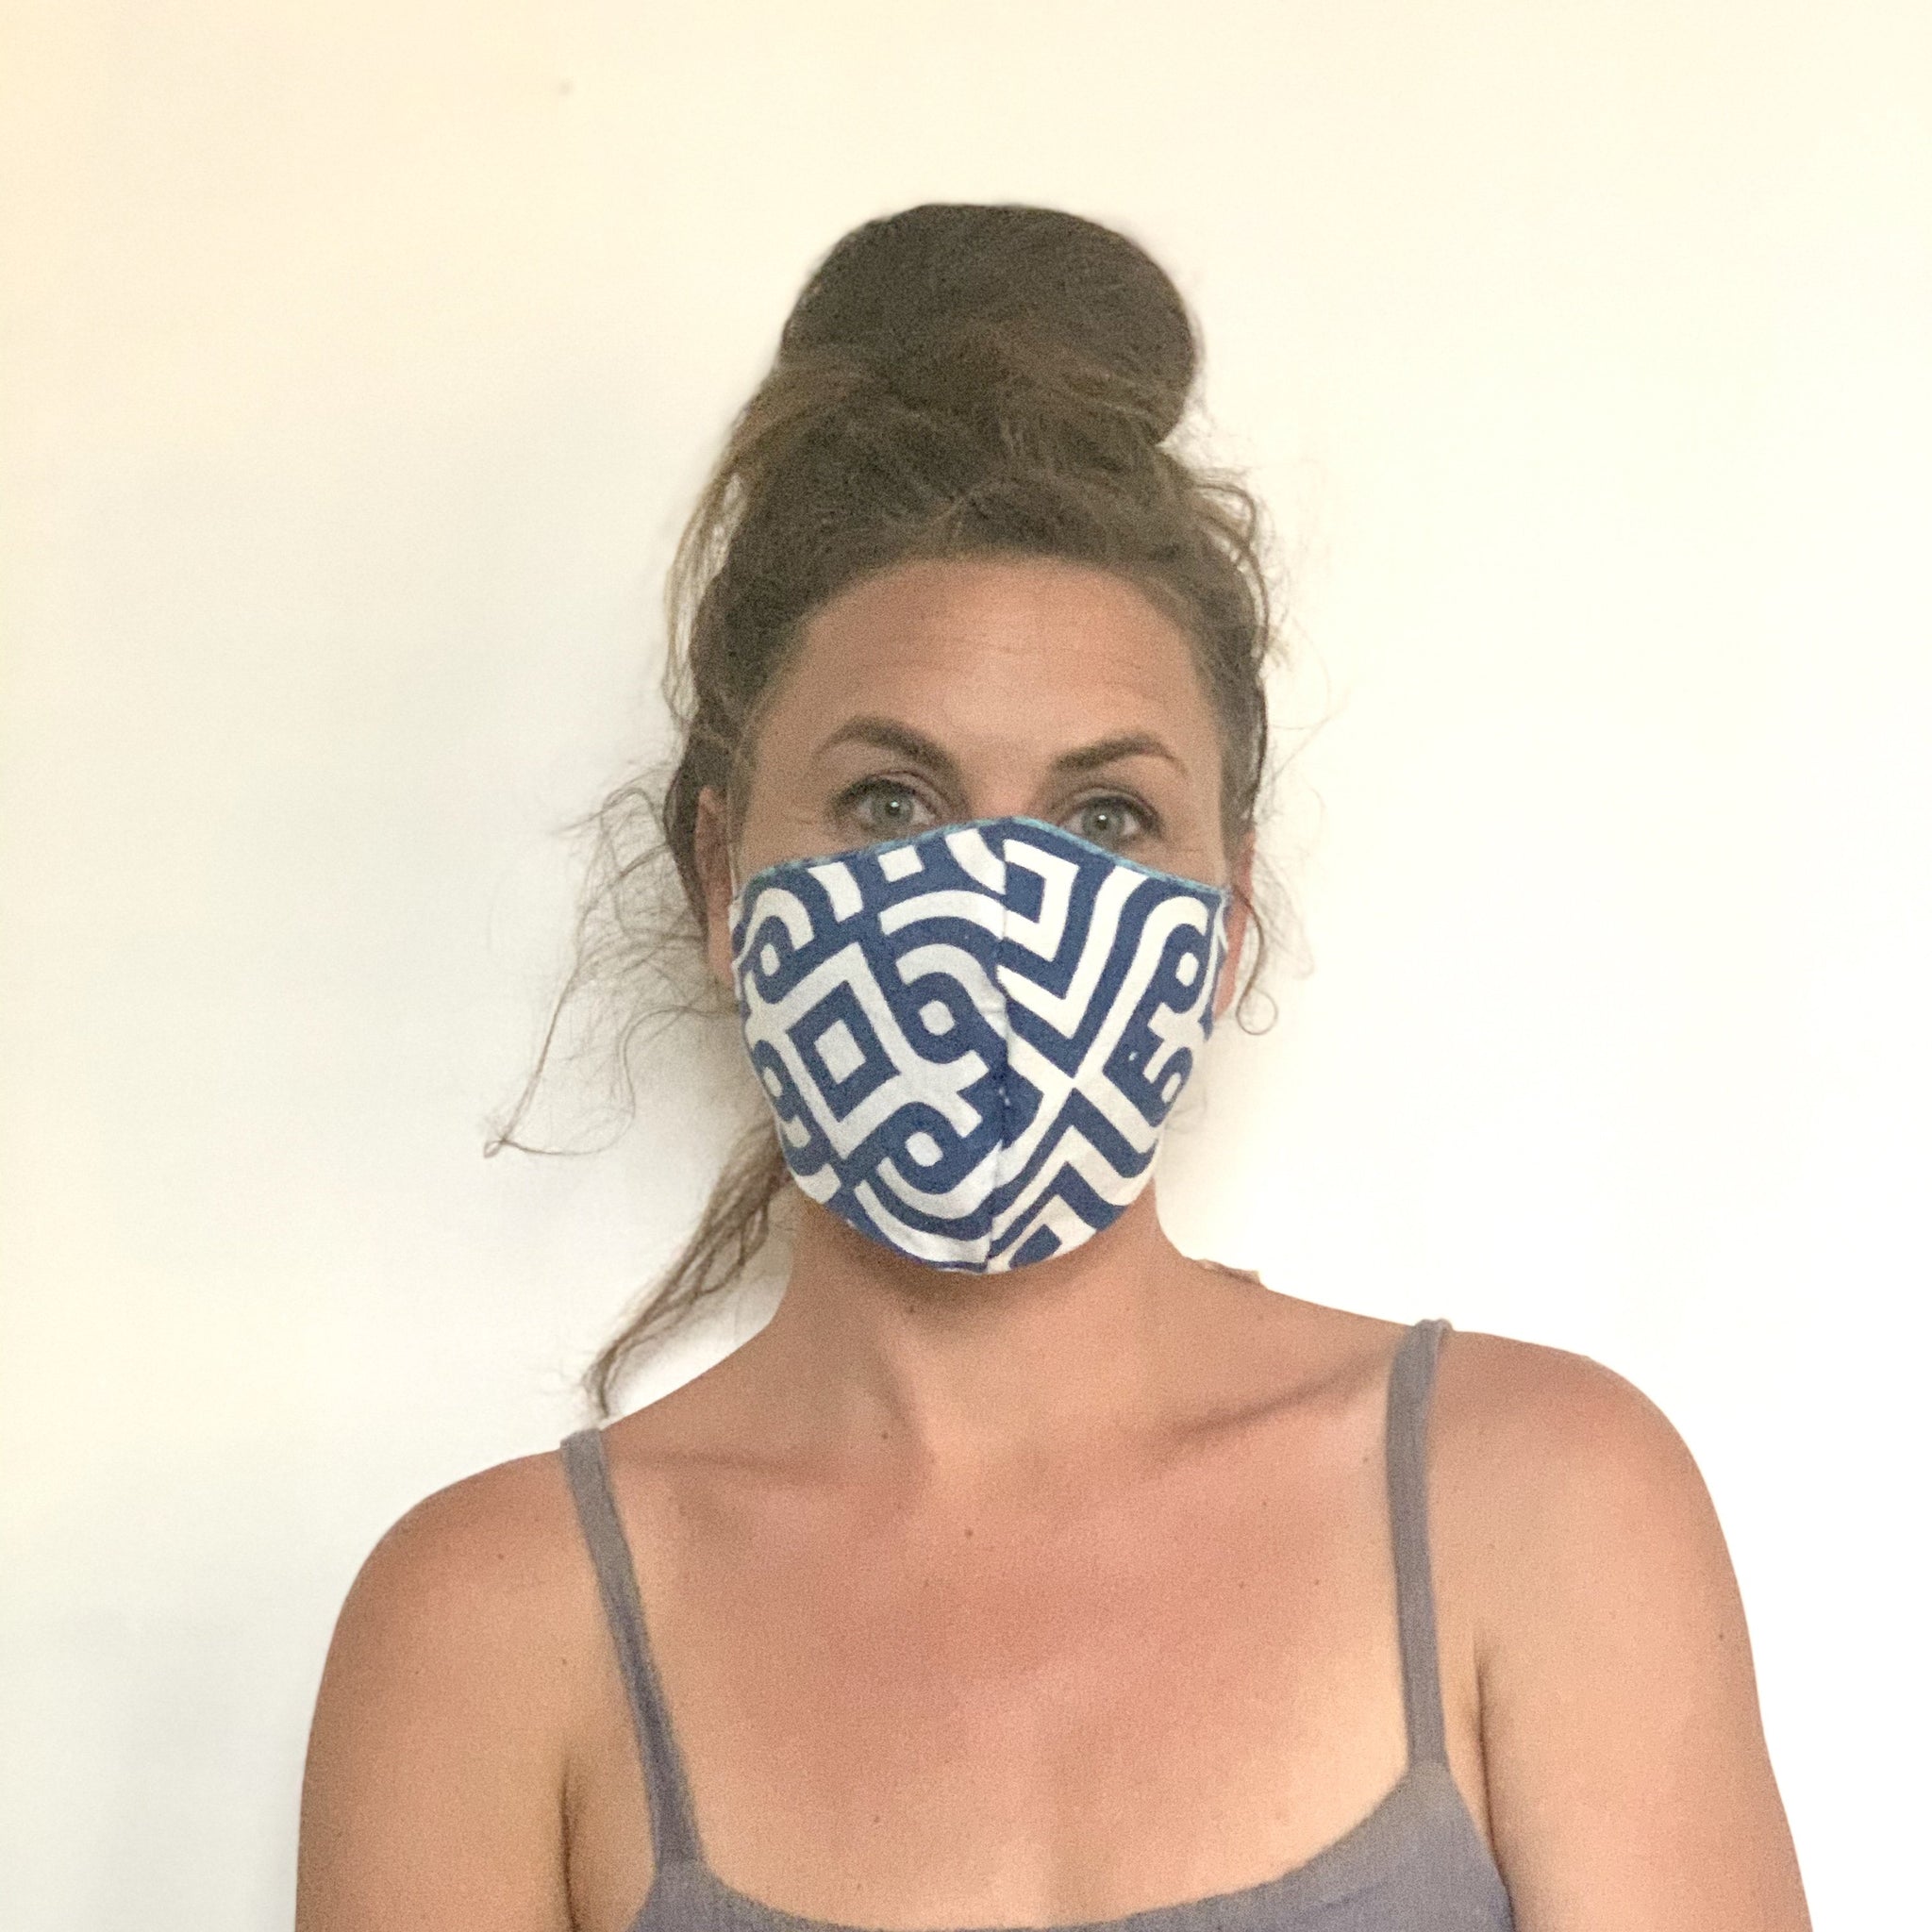 Single Face Mask - Prints